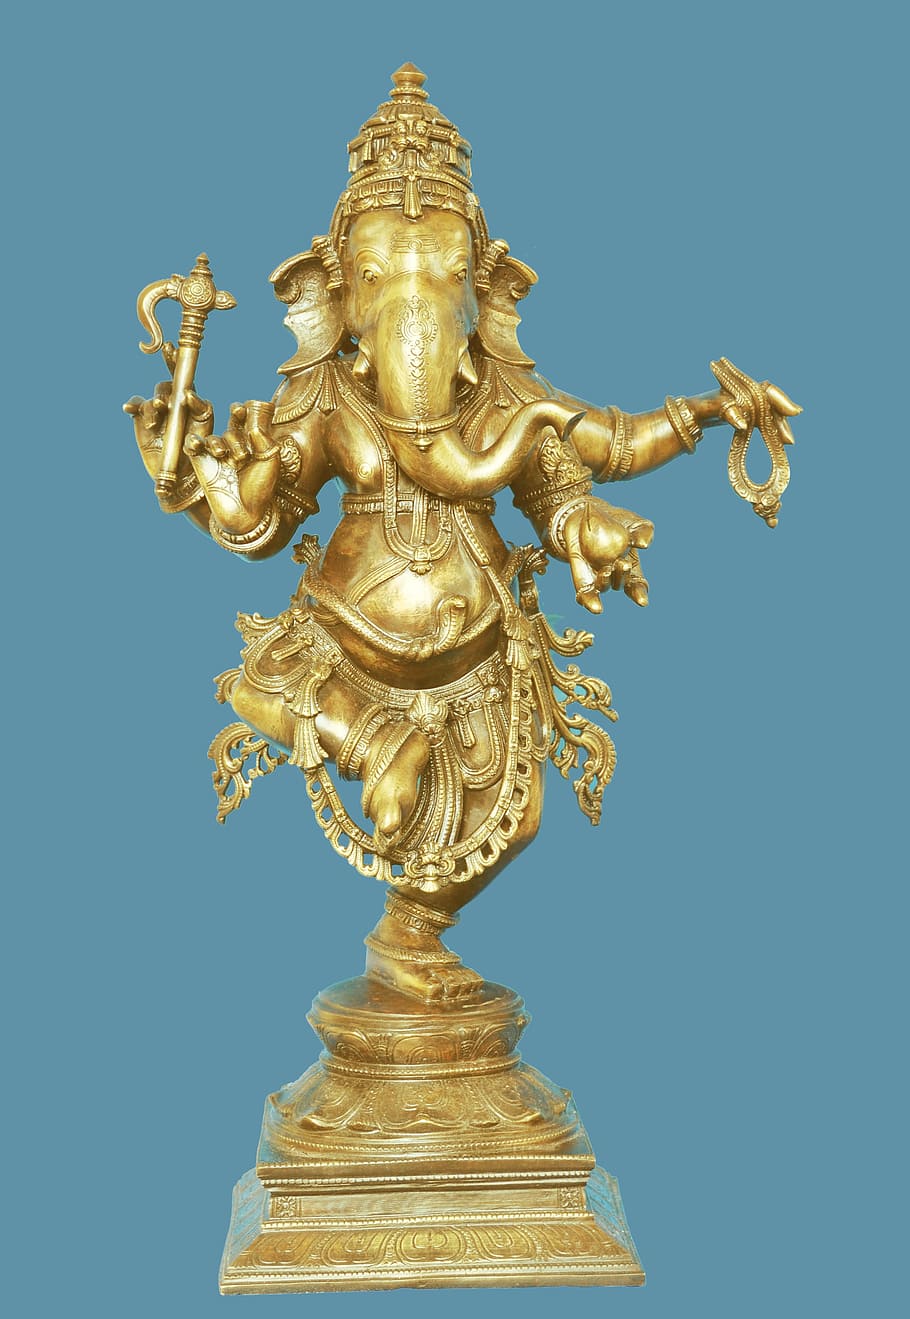 ganesha figurine, dancing ganesh, god, hindu, elephant, sculpture, gold colored, statue, gold, art and craft